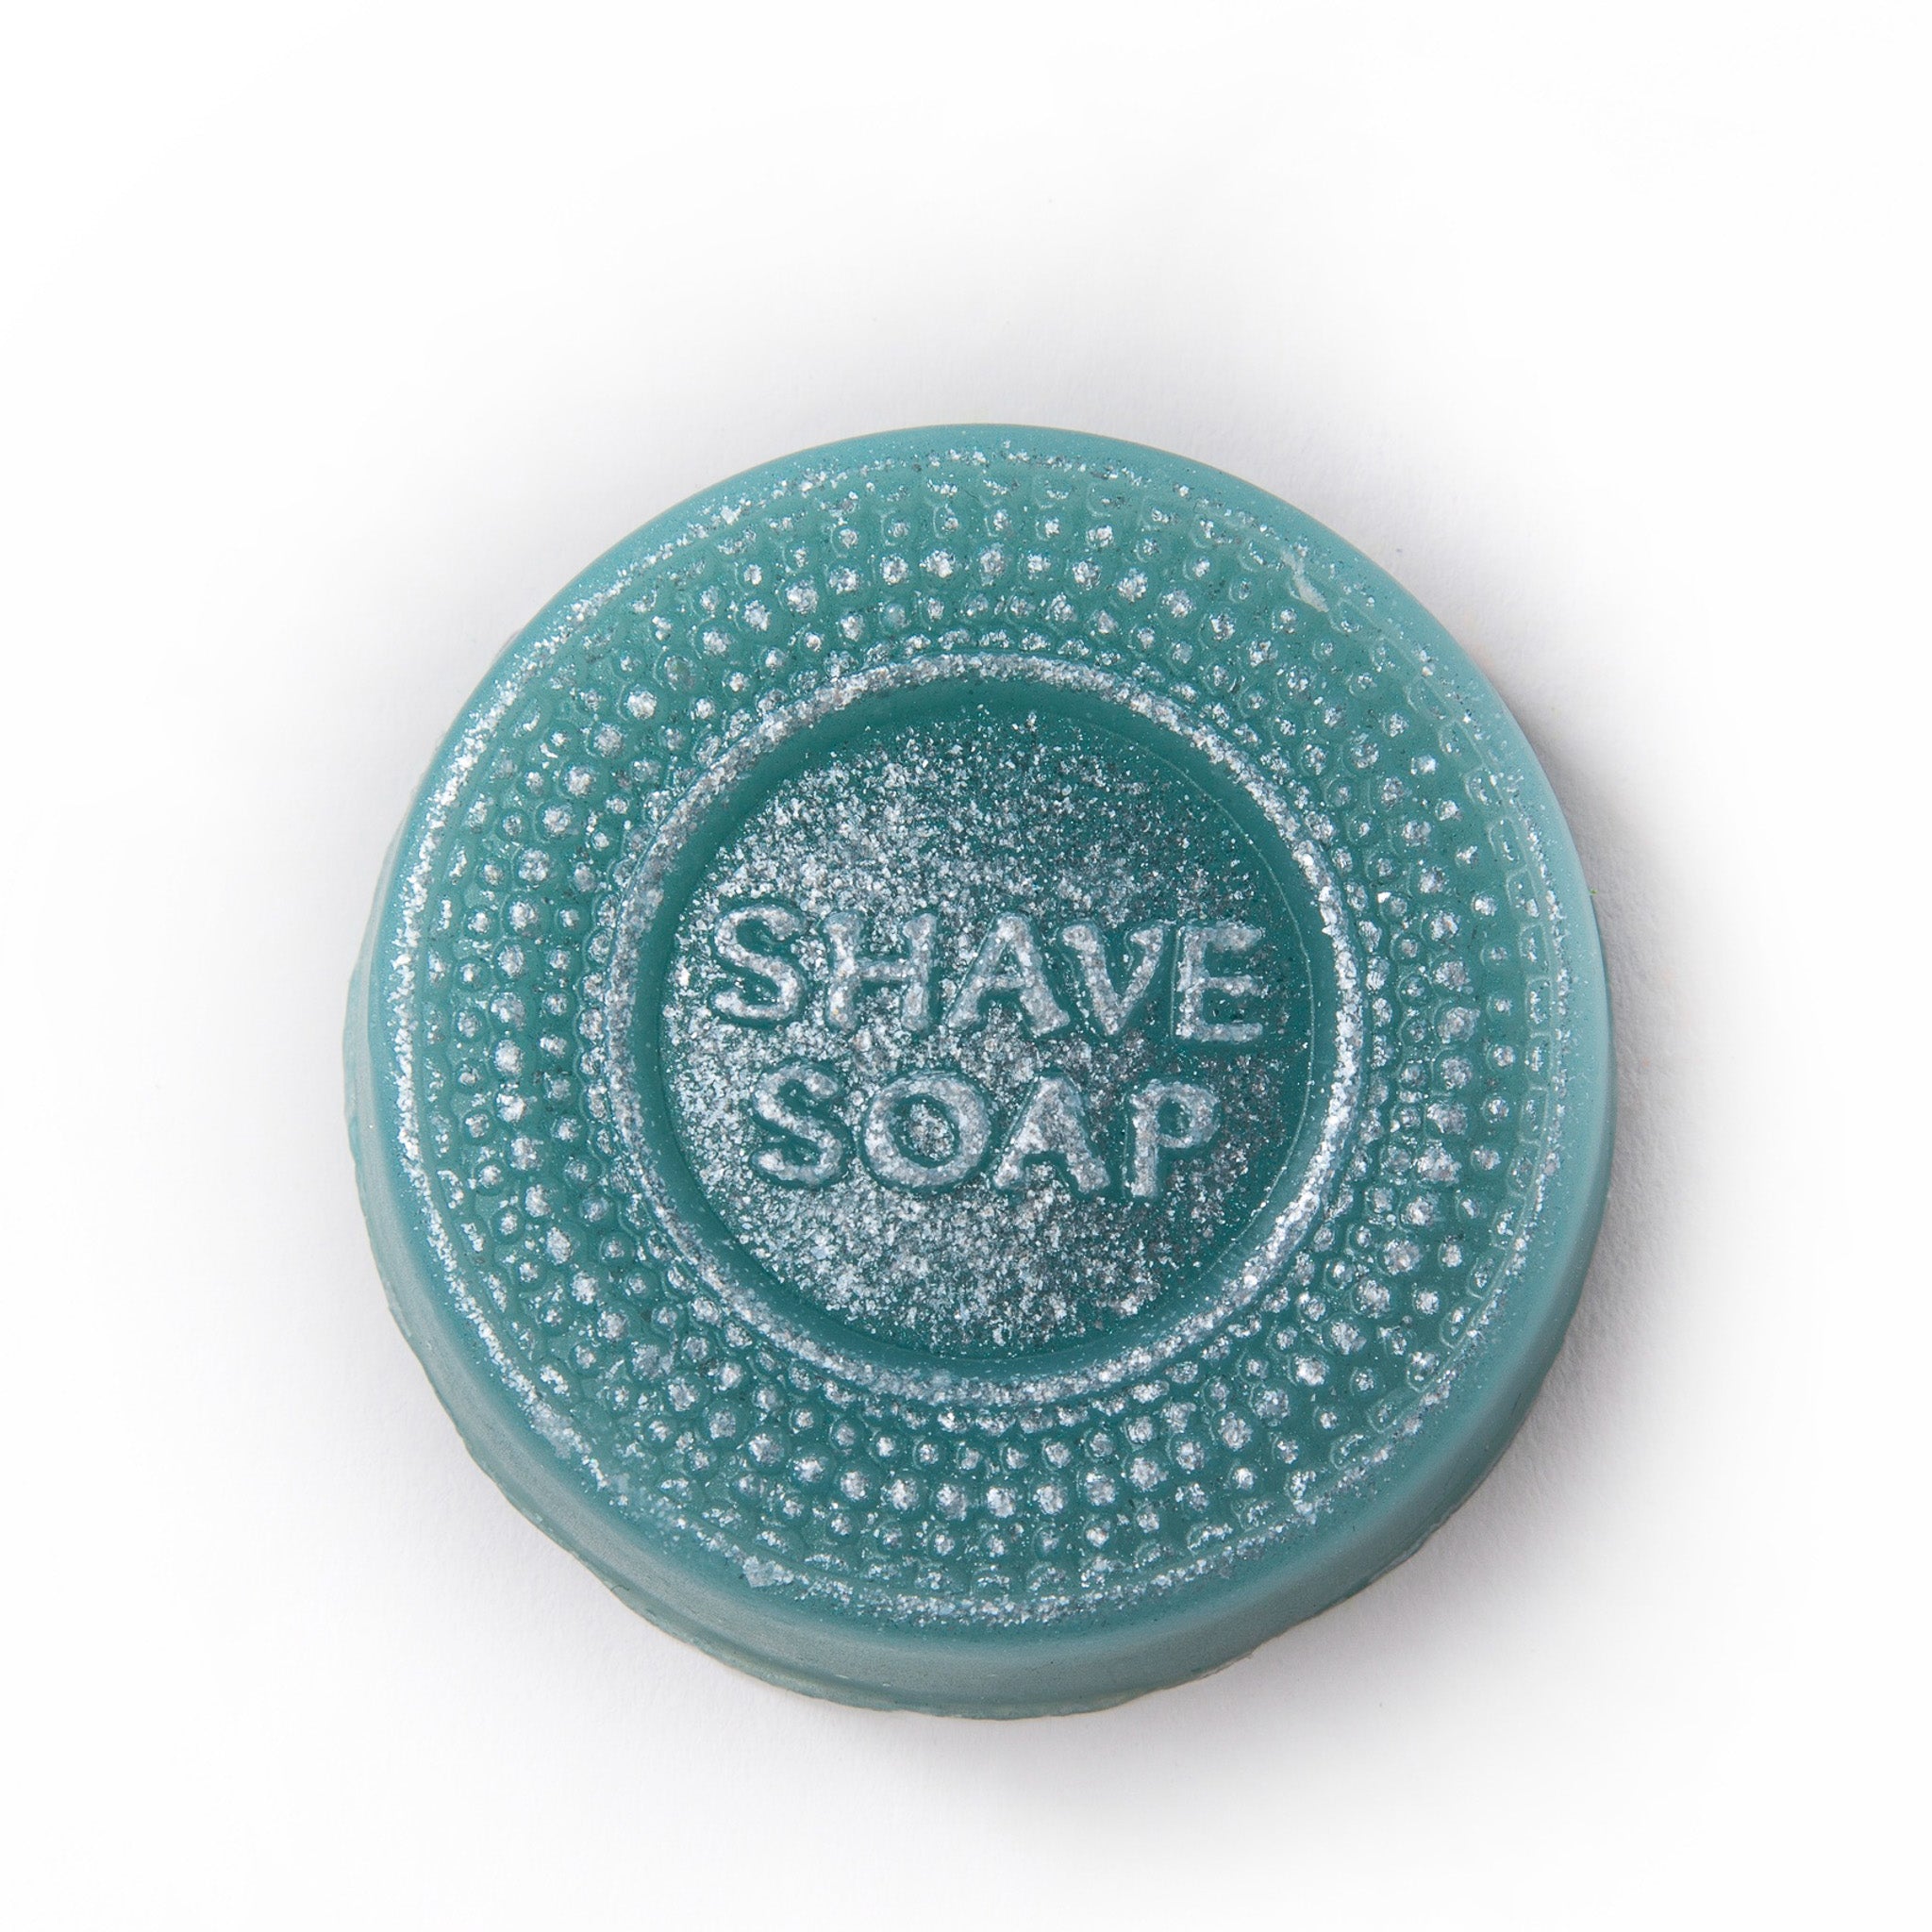 The Tiffany Shave Soap